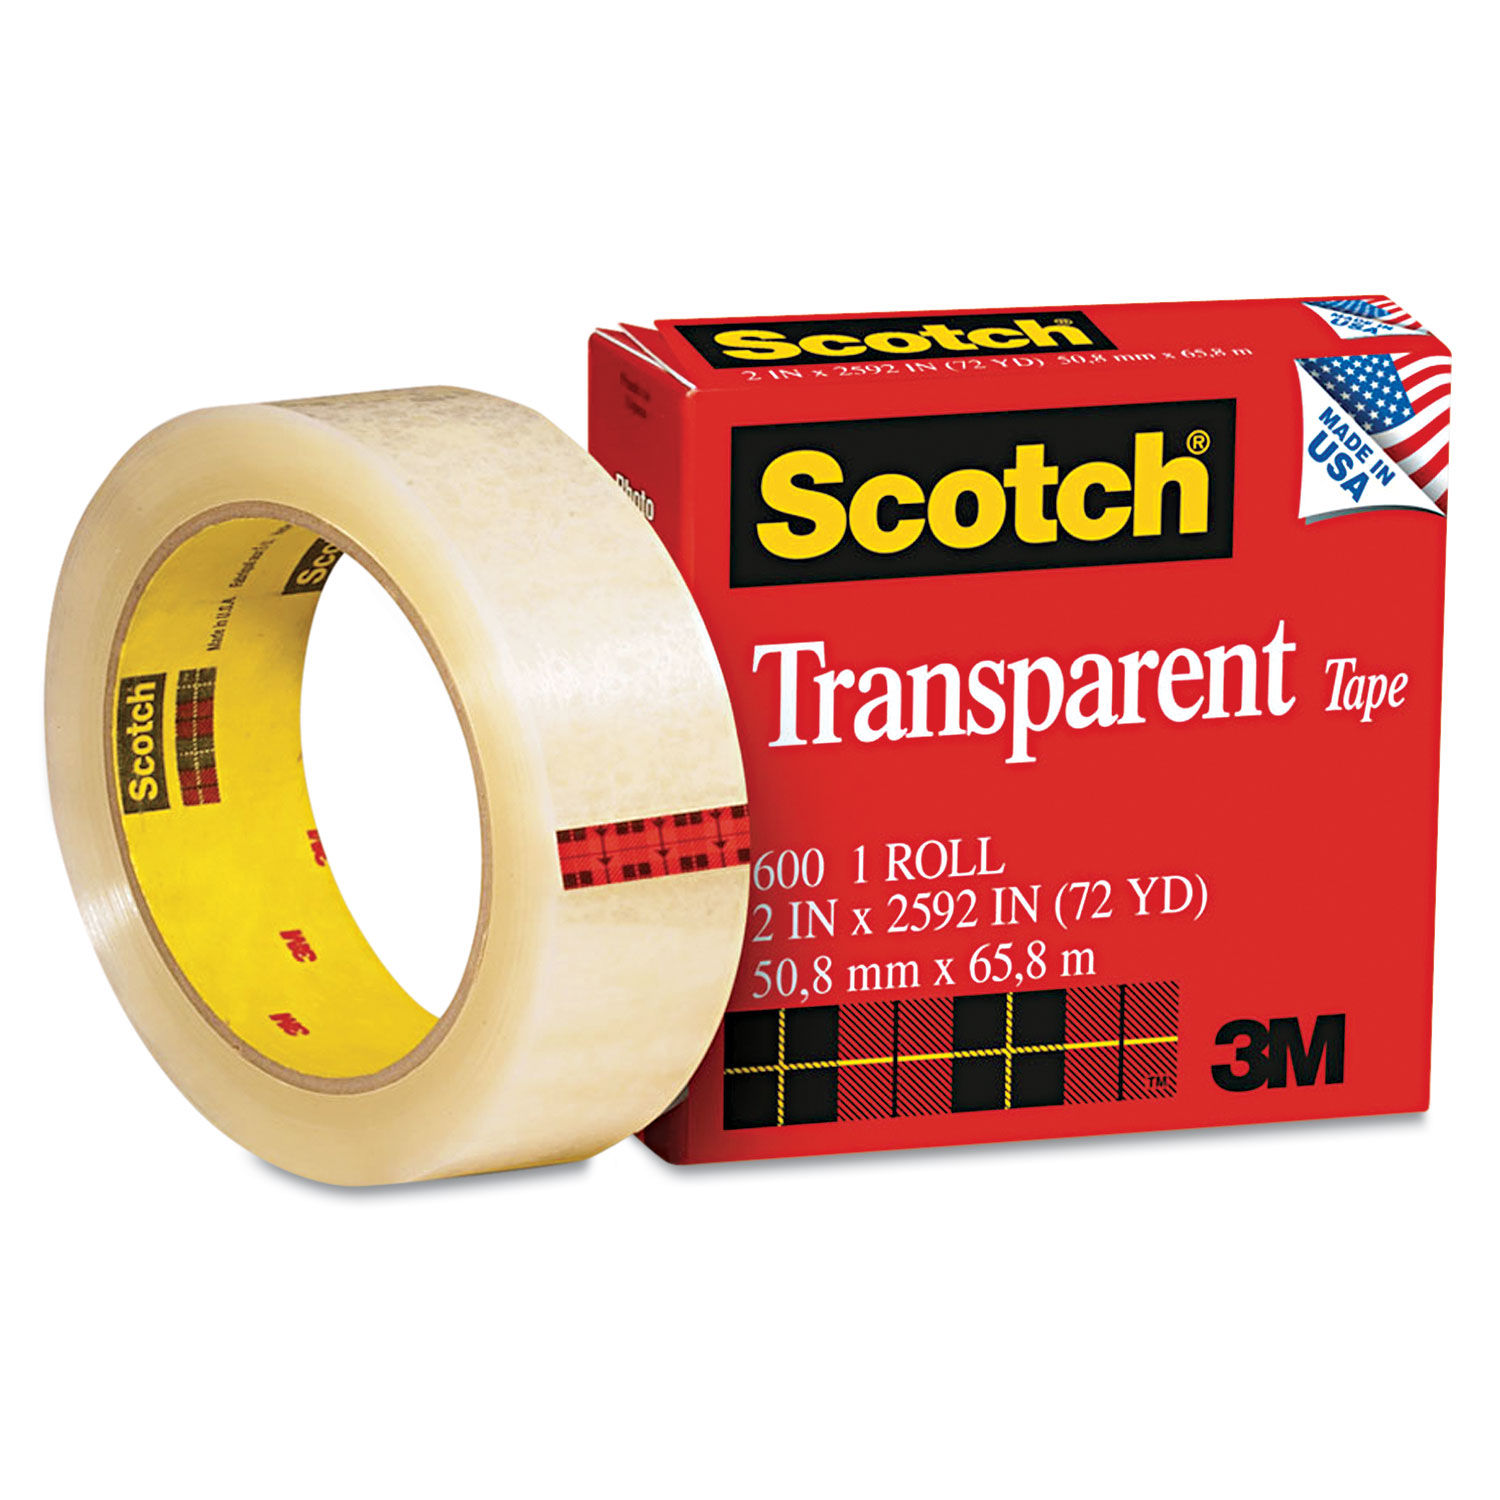 TRANSPARENT TAPE by Scotch® MMM60025922